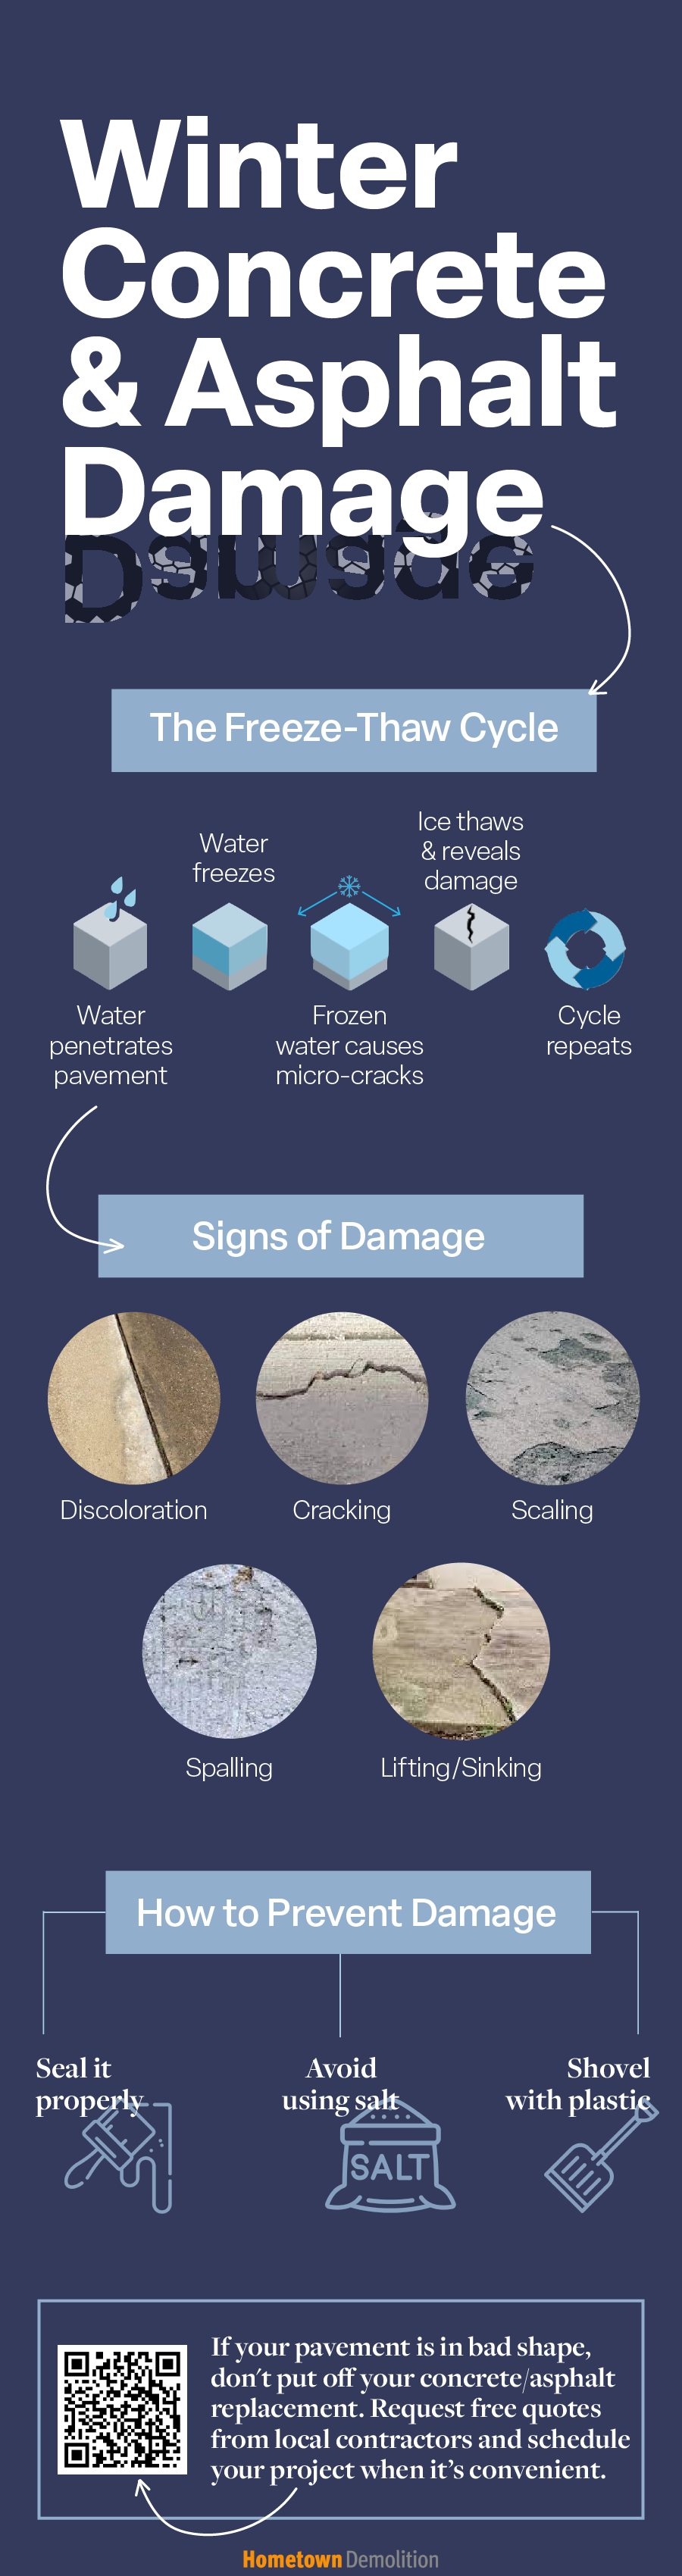 winter concrete and asphalt damage infographic